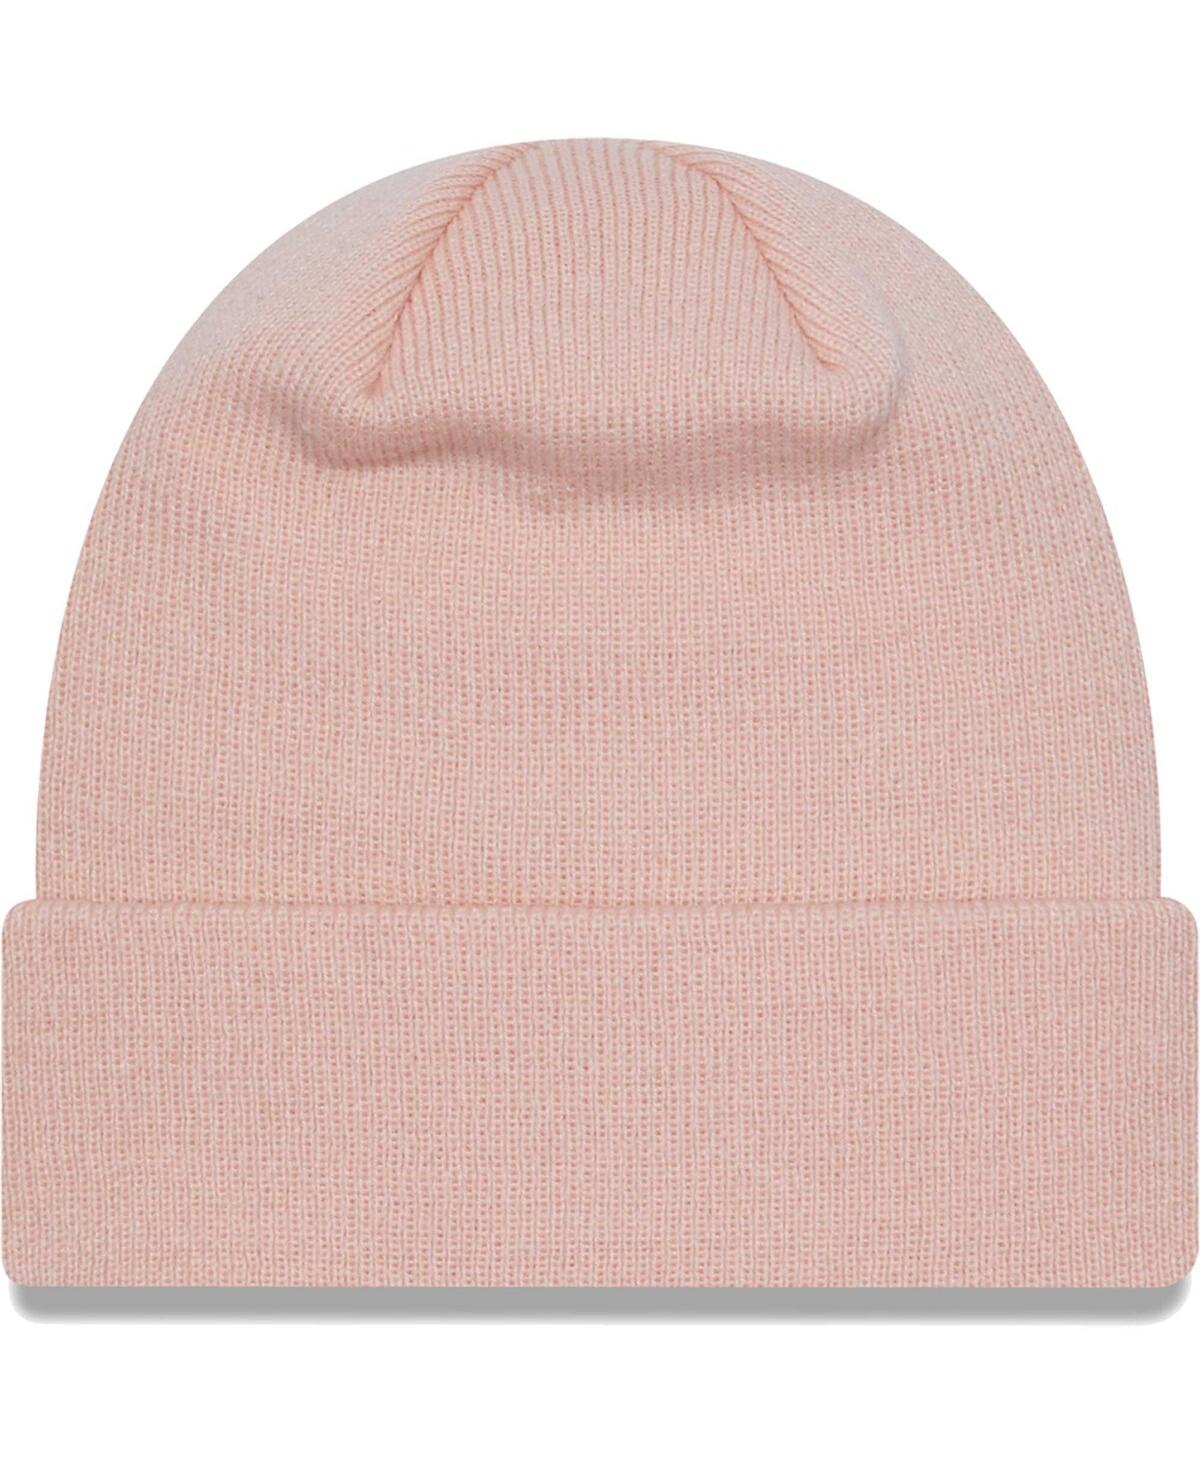 Shop New Era Men's  Pink Tottenham Hotspur Seasonal Cuffed Knit Hat